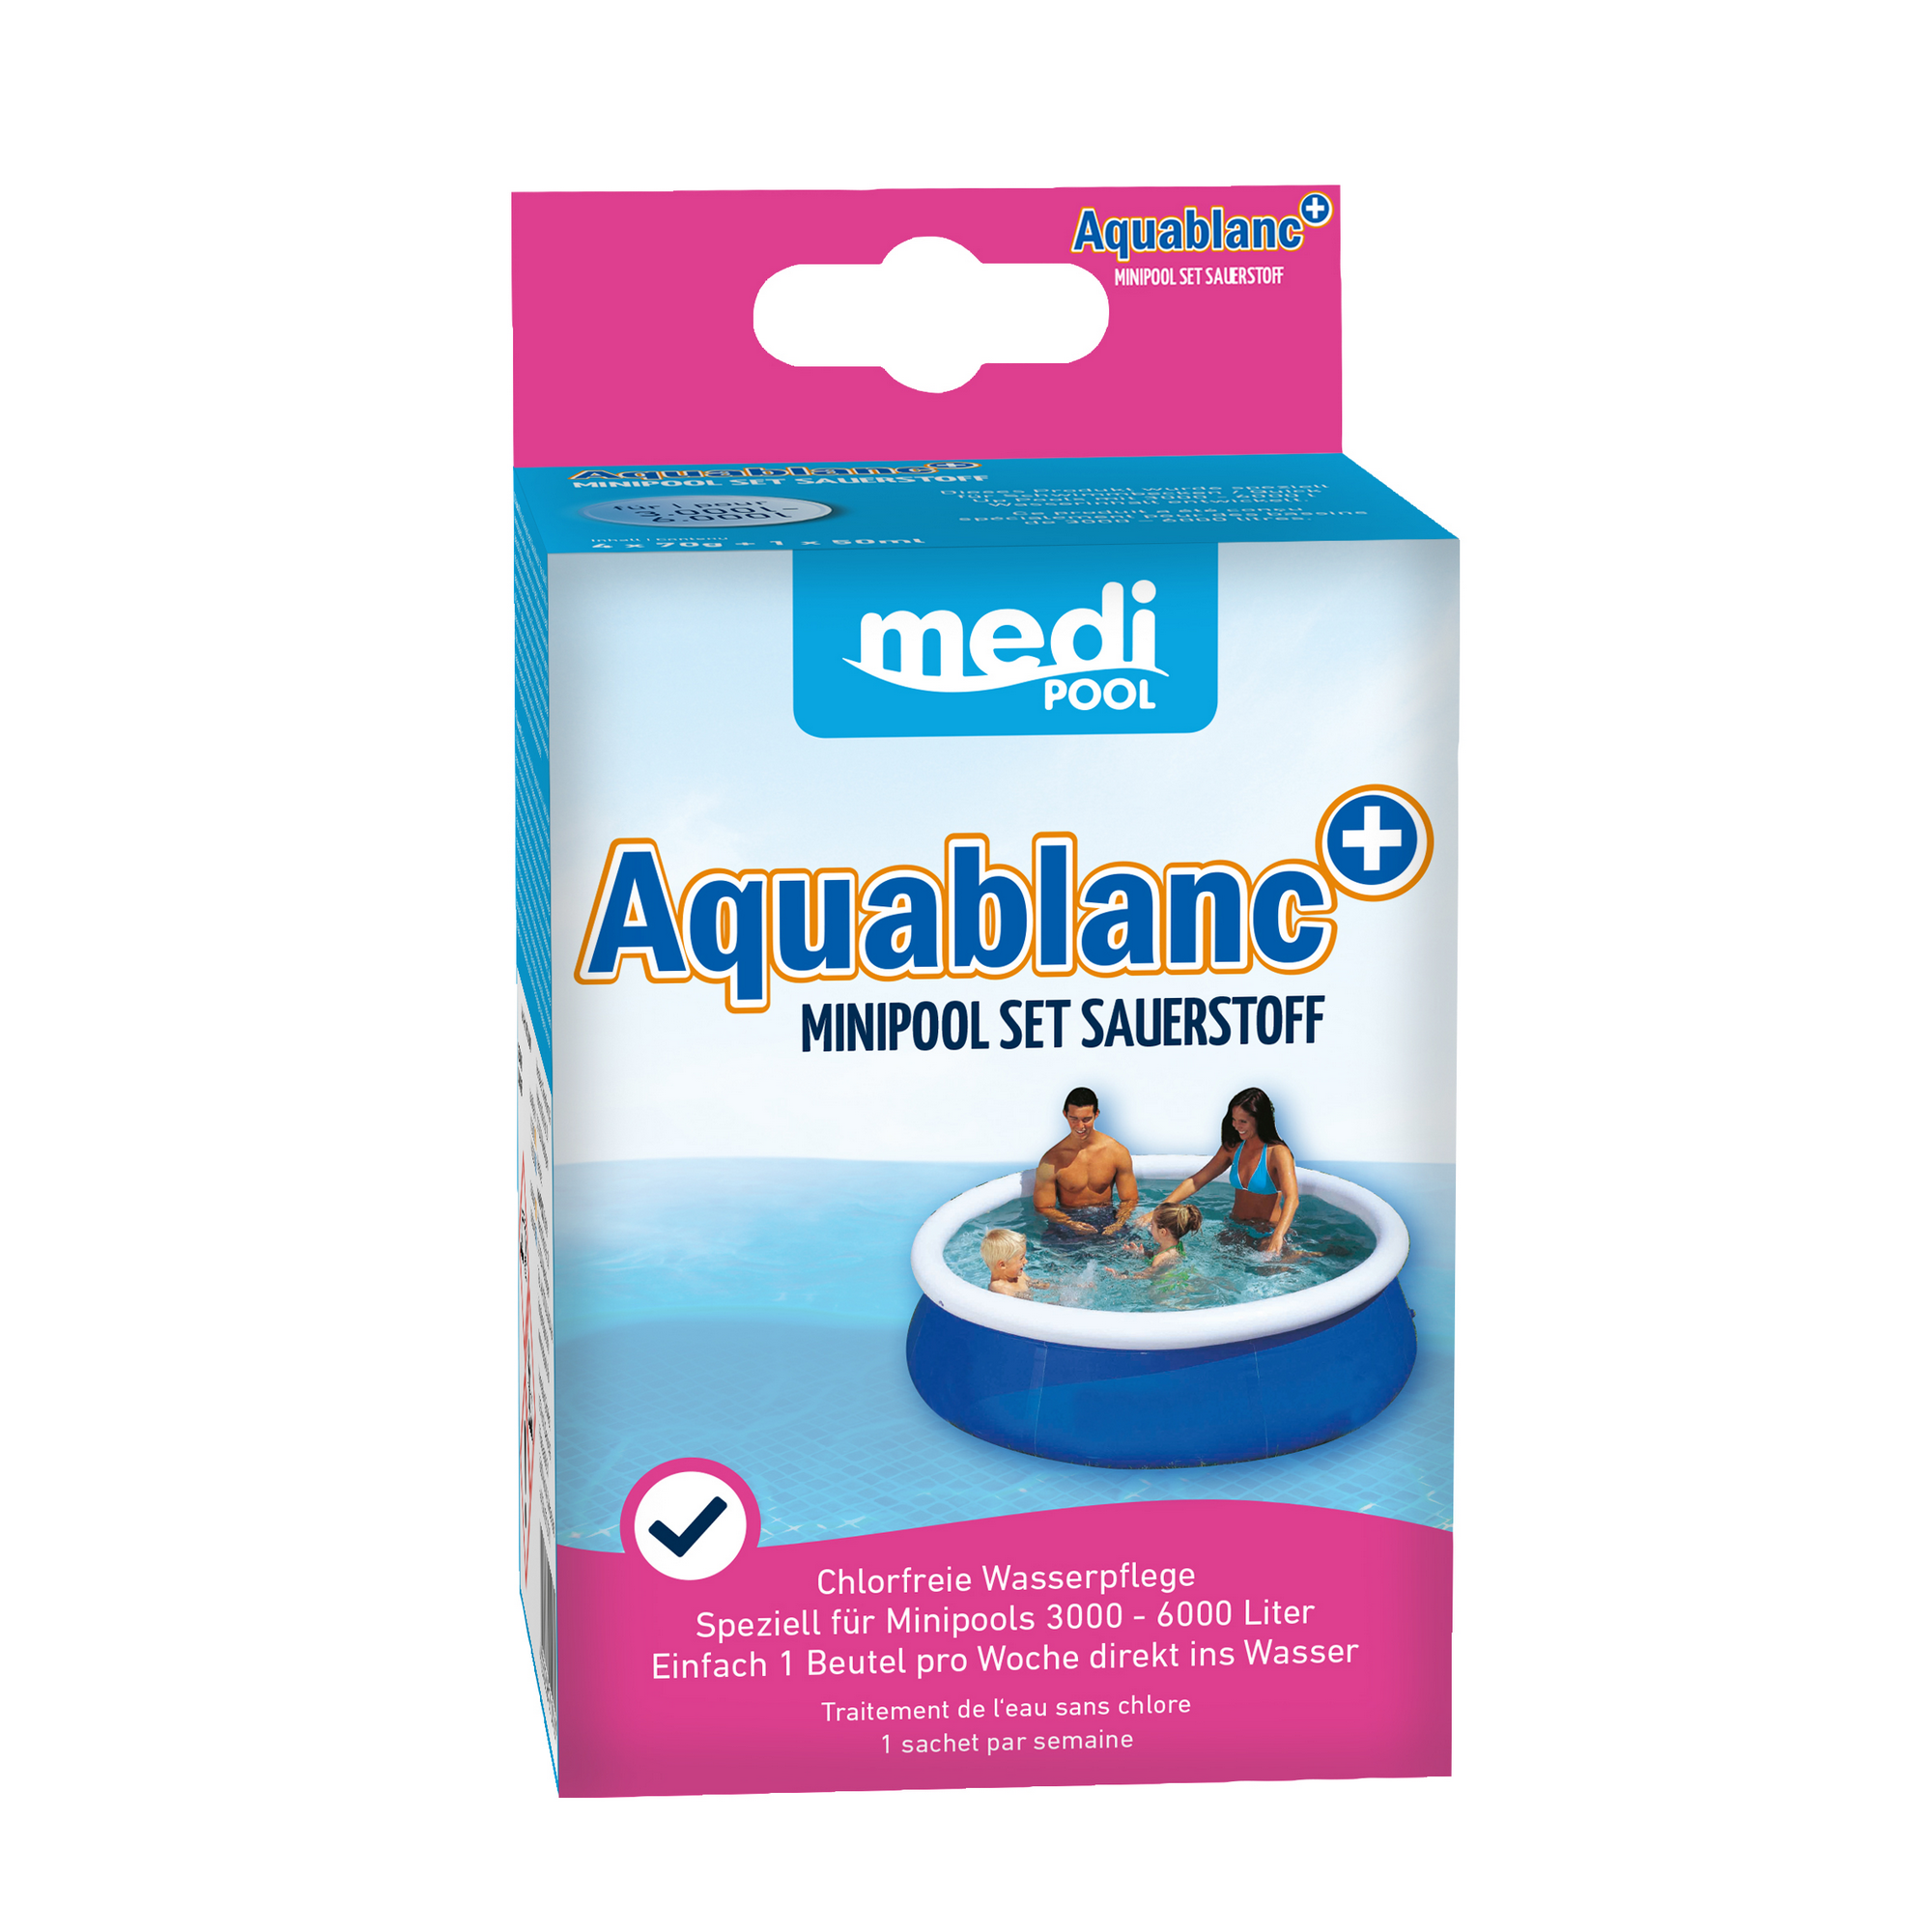 Minipool-Set 'Aquablanc+' mit Sauerstoff 320 g, für die Poolpflege + product picture